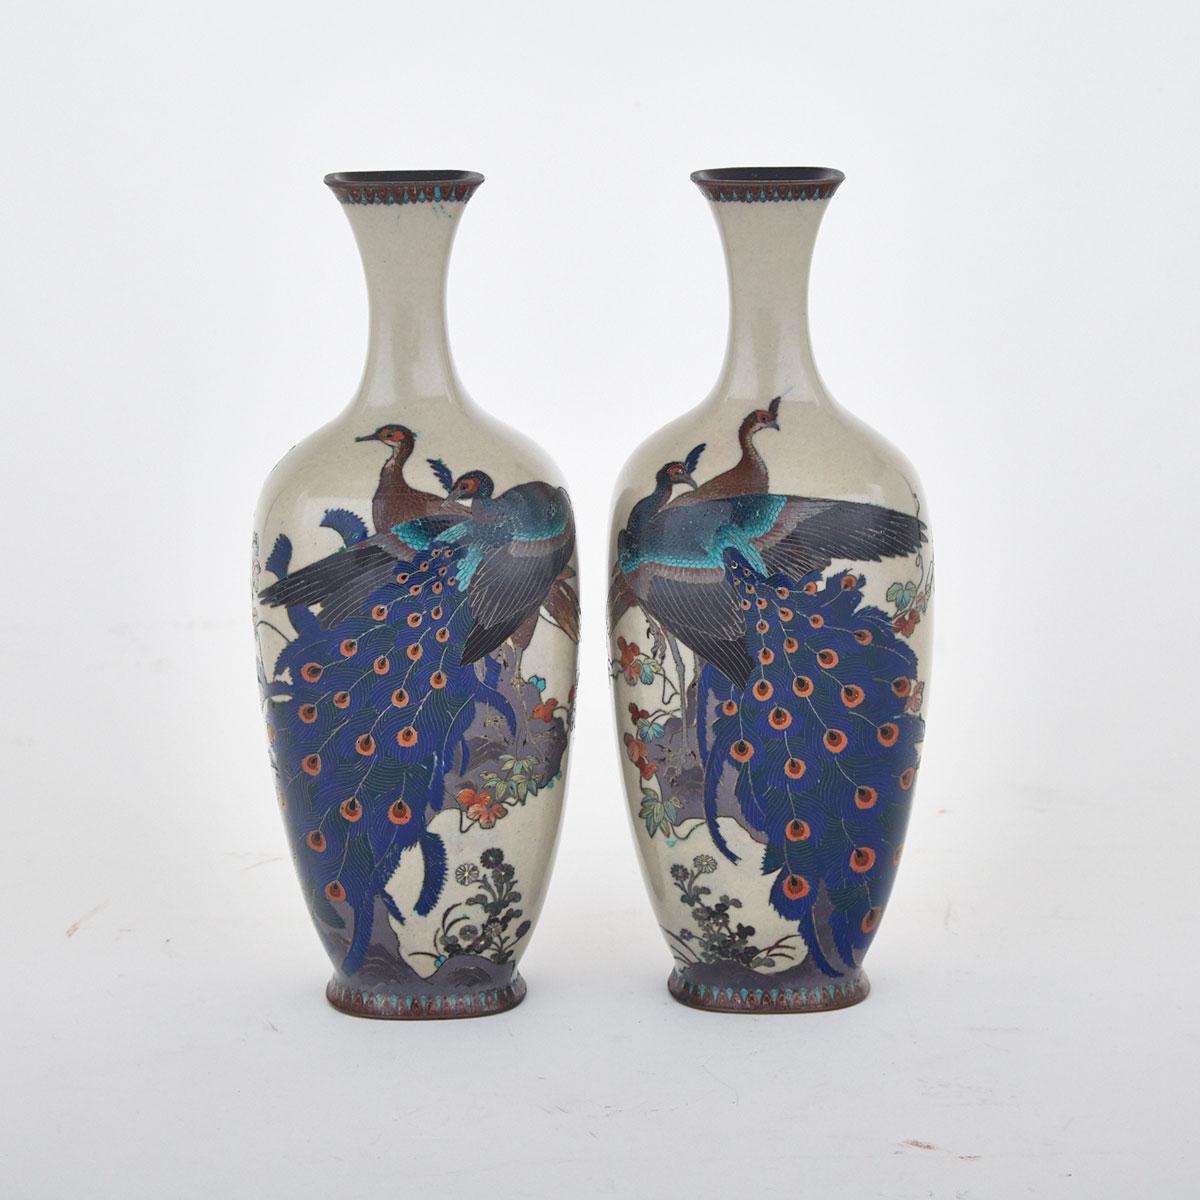 Pair of Cloisonné Enamel Peacock Vases, Japan, Early 20th Century